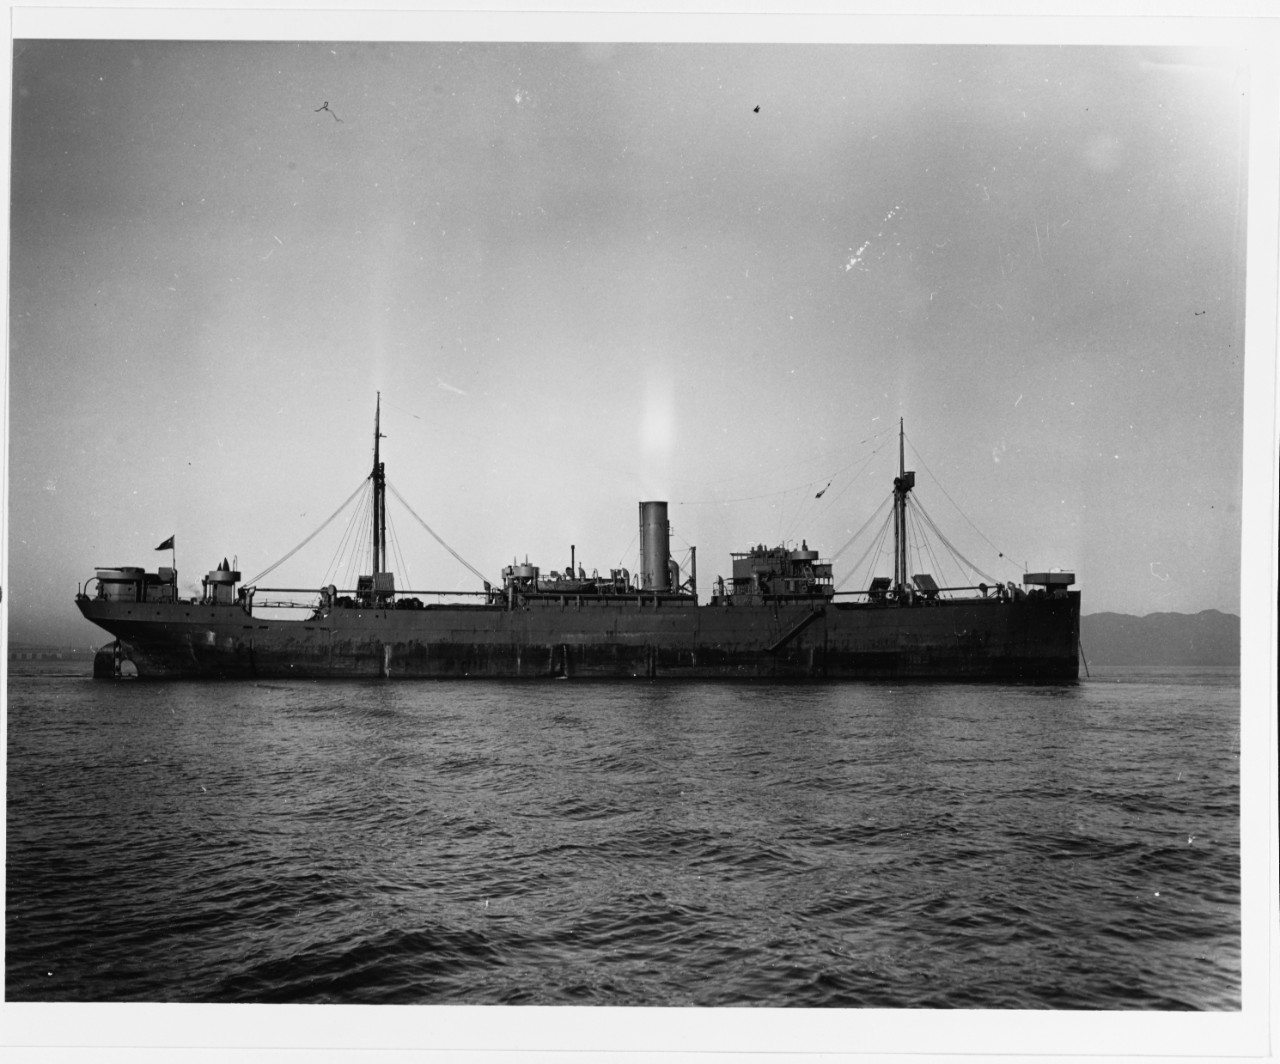 S.S. FABRITZIUS (USSR Merchant Cargo Ship, 1906-1950?)